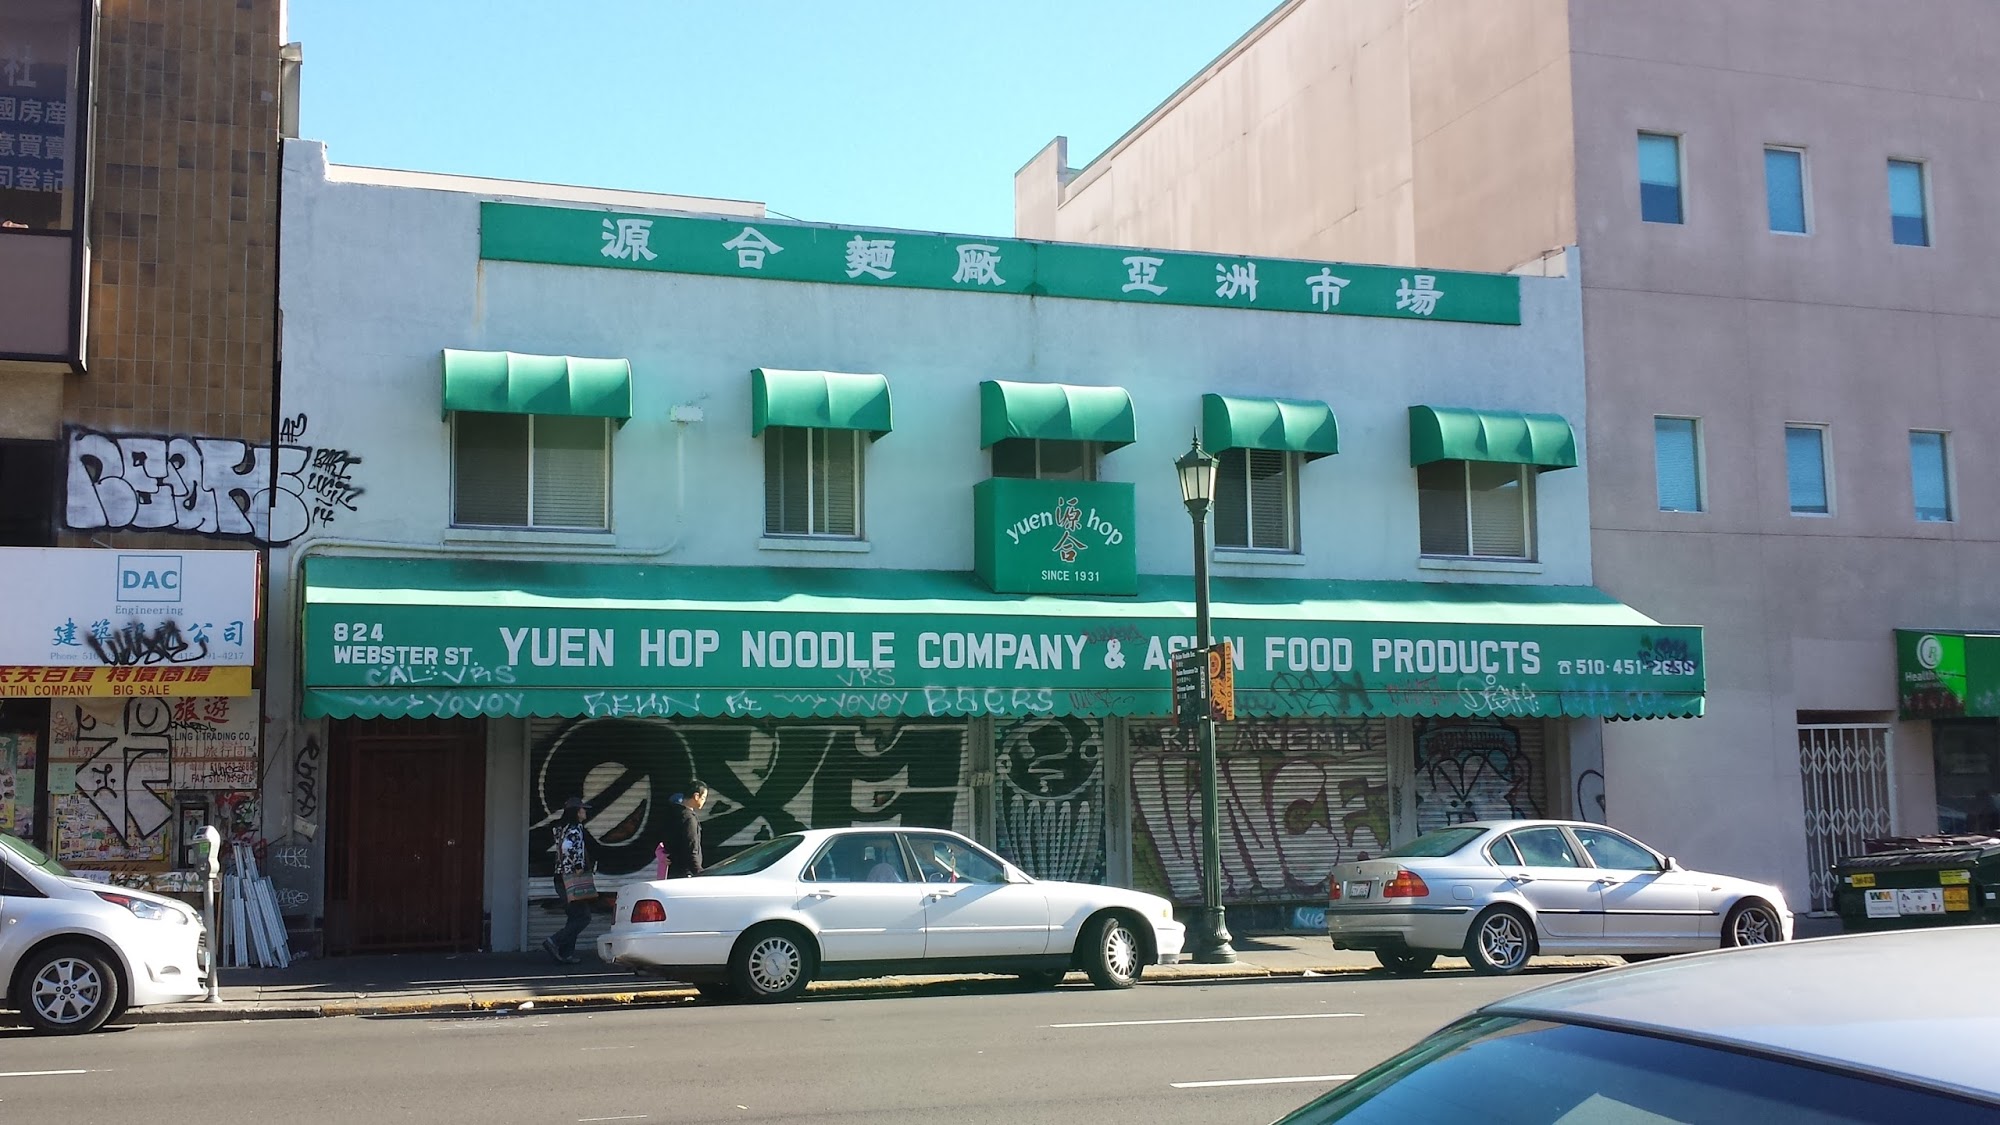 Yuen Hop Noodle Company & Grocery